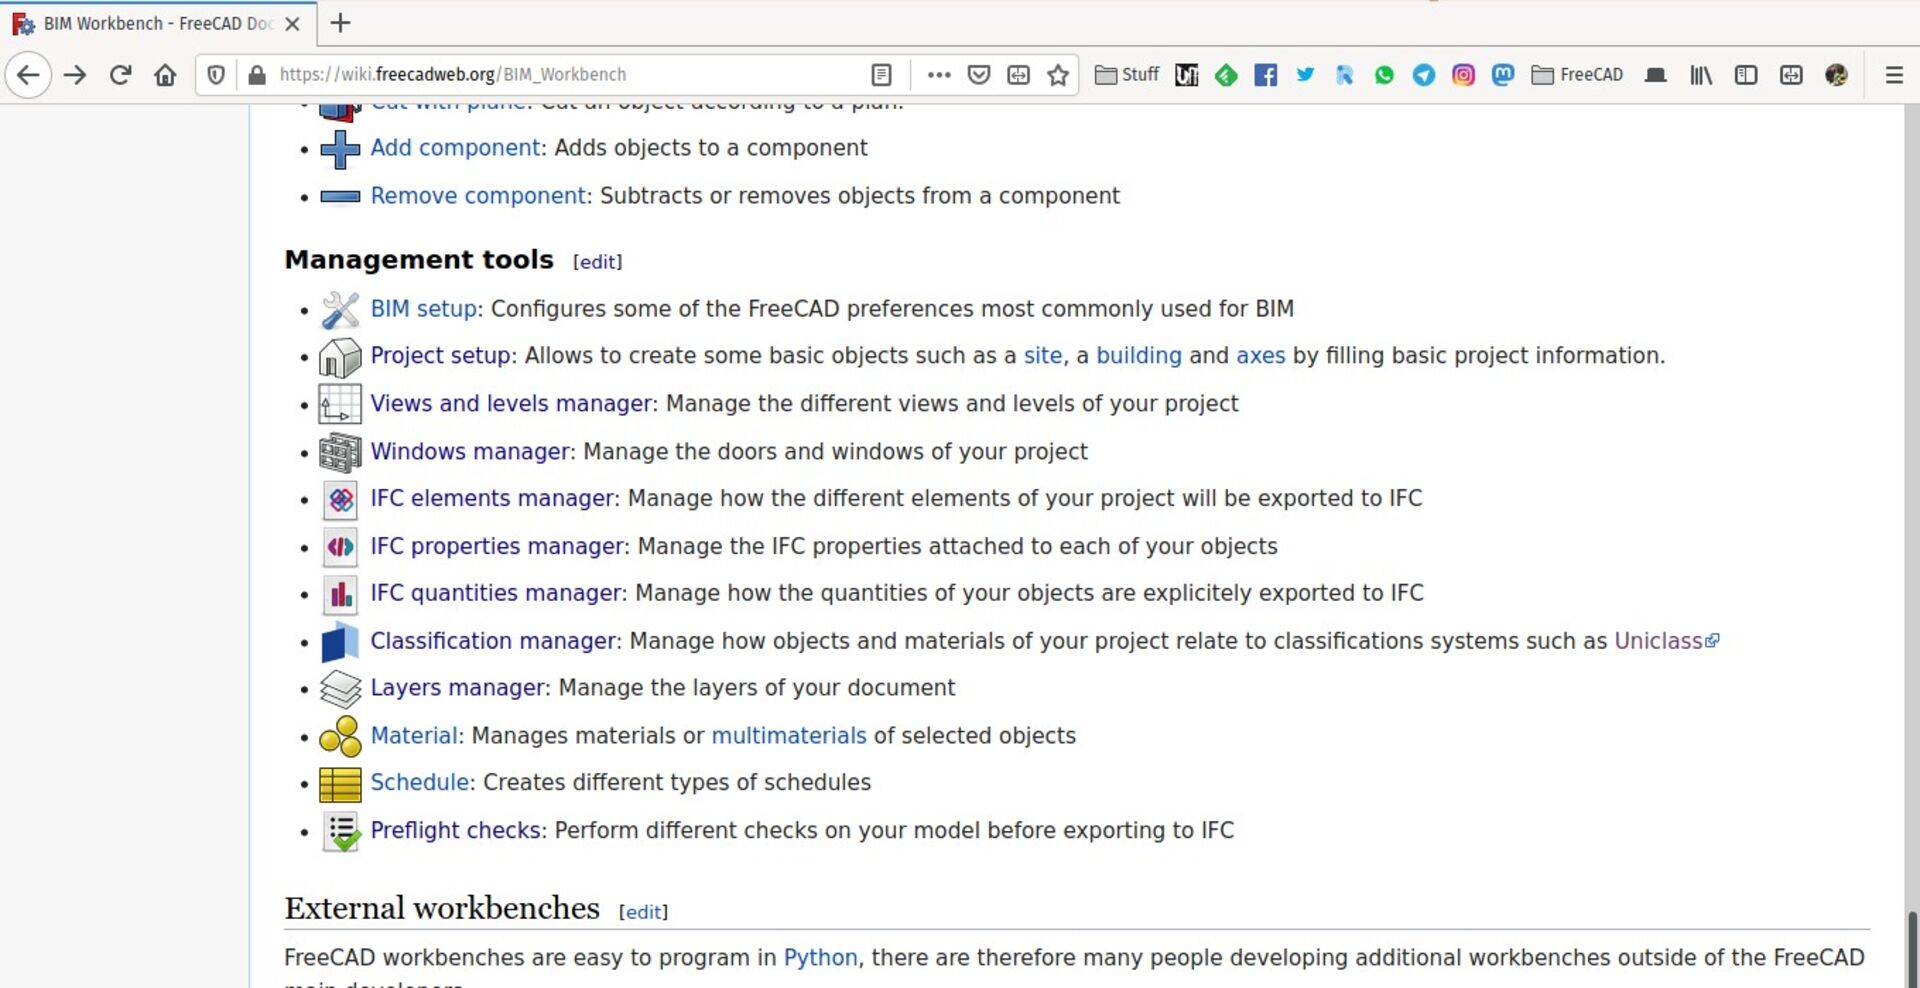 the BIM doc wiki page